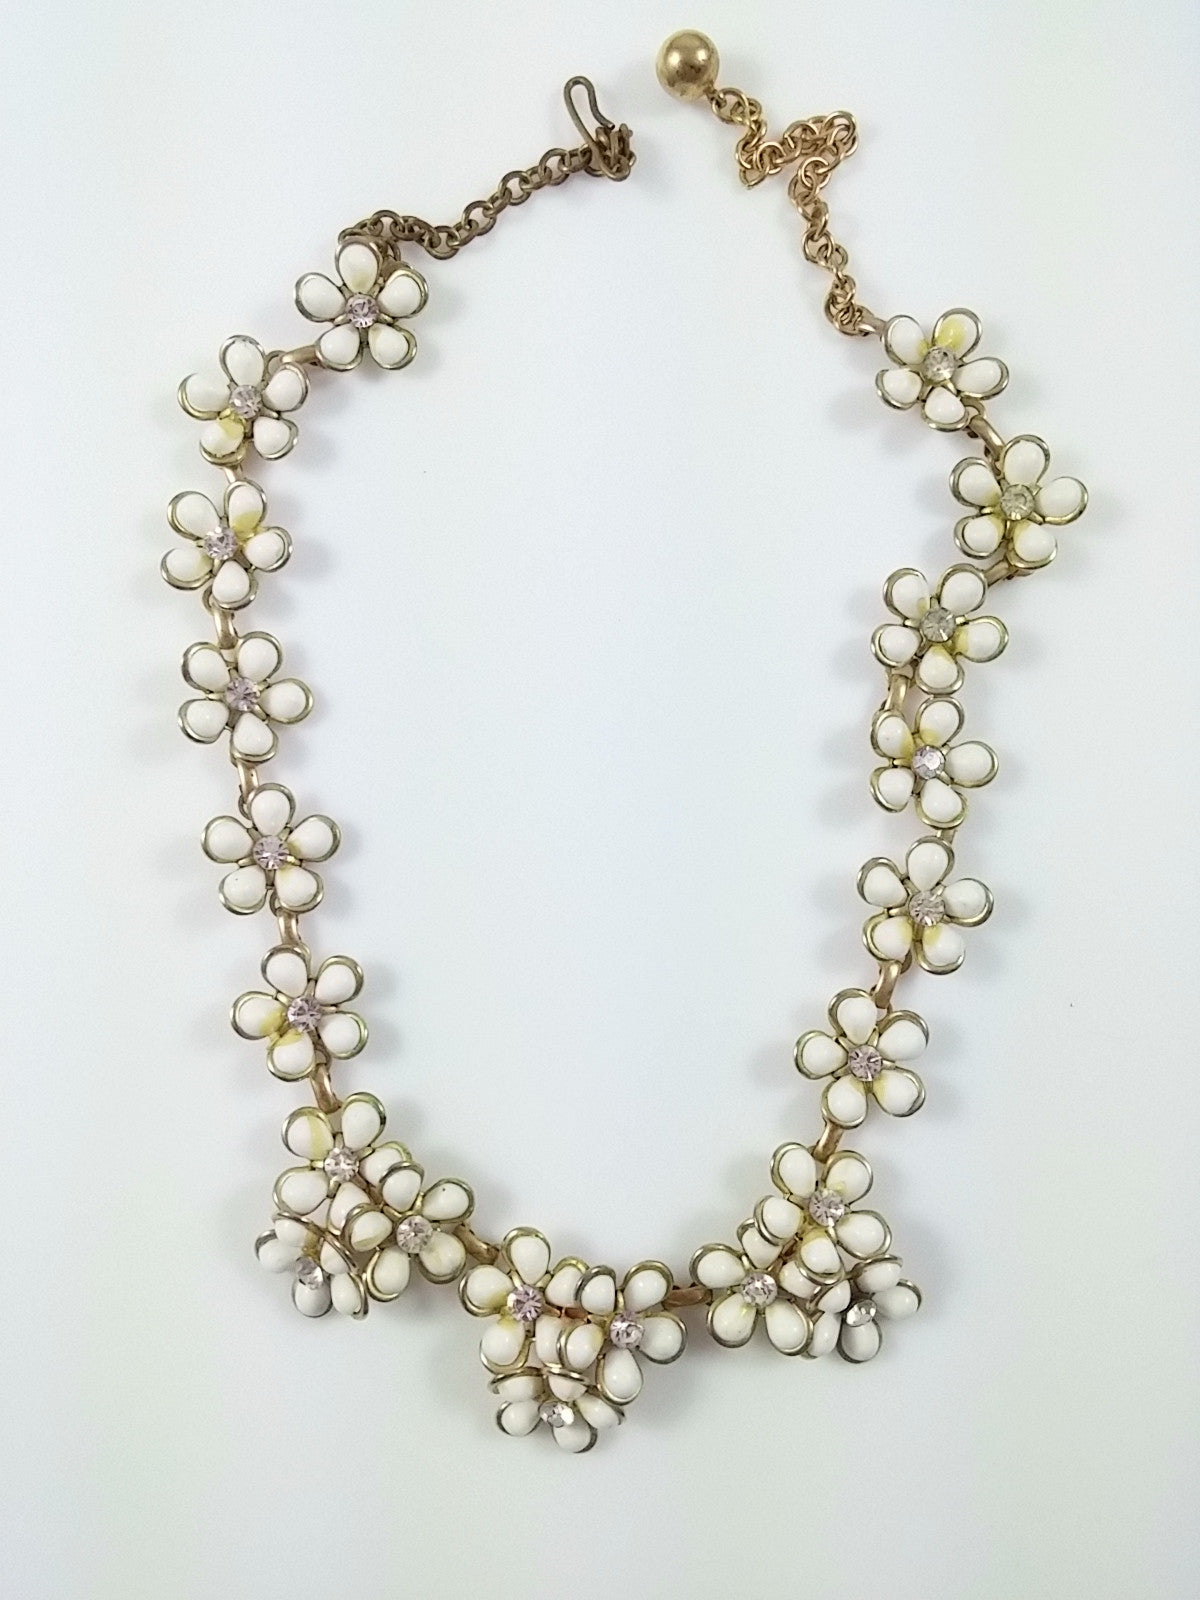 Vintage Floral Necklace Clusters of White Enamel Flowers w/ adjustable clasp - Dirty 30 Vintage | Vintage Clothing, Vintage Jewelry, Vintage Accessories